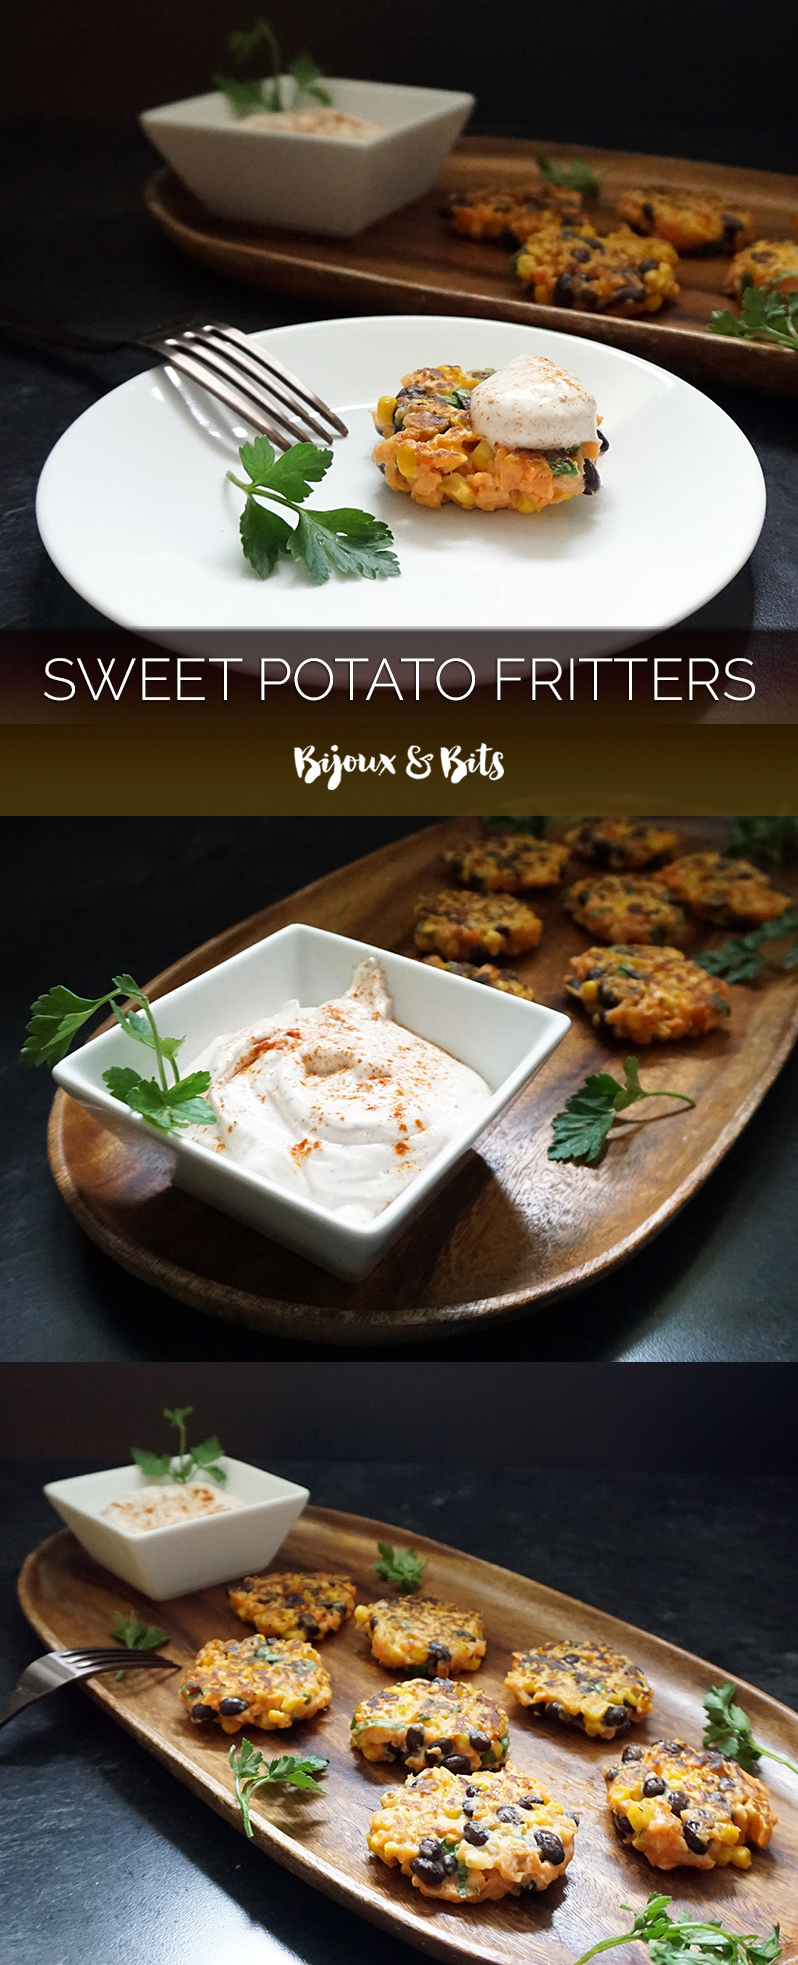 Sweet potato fritters from @bijouxandbits #fritters #appetizer #sweetpotato